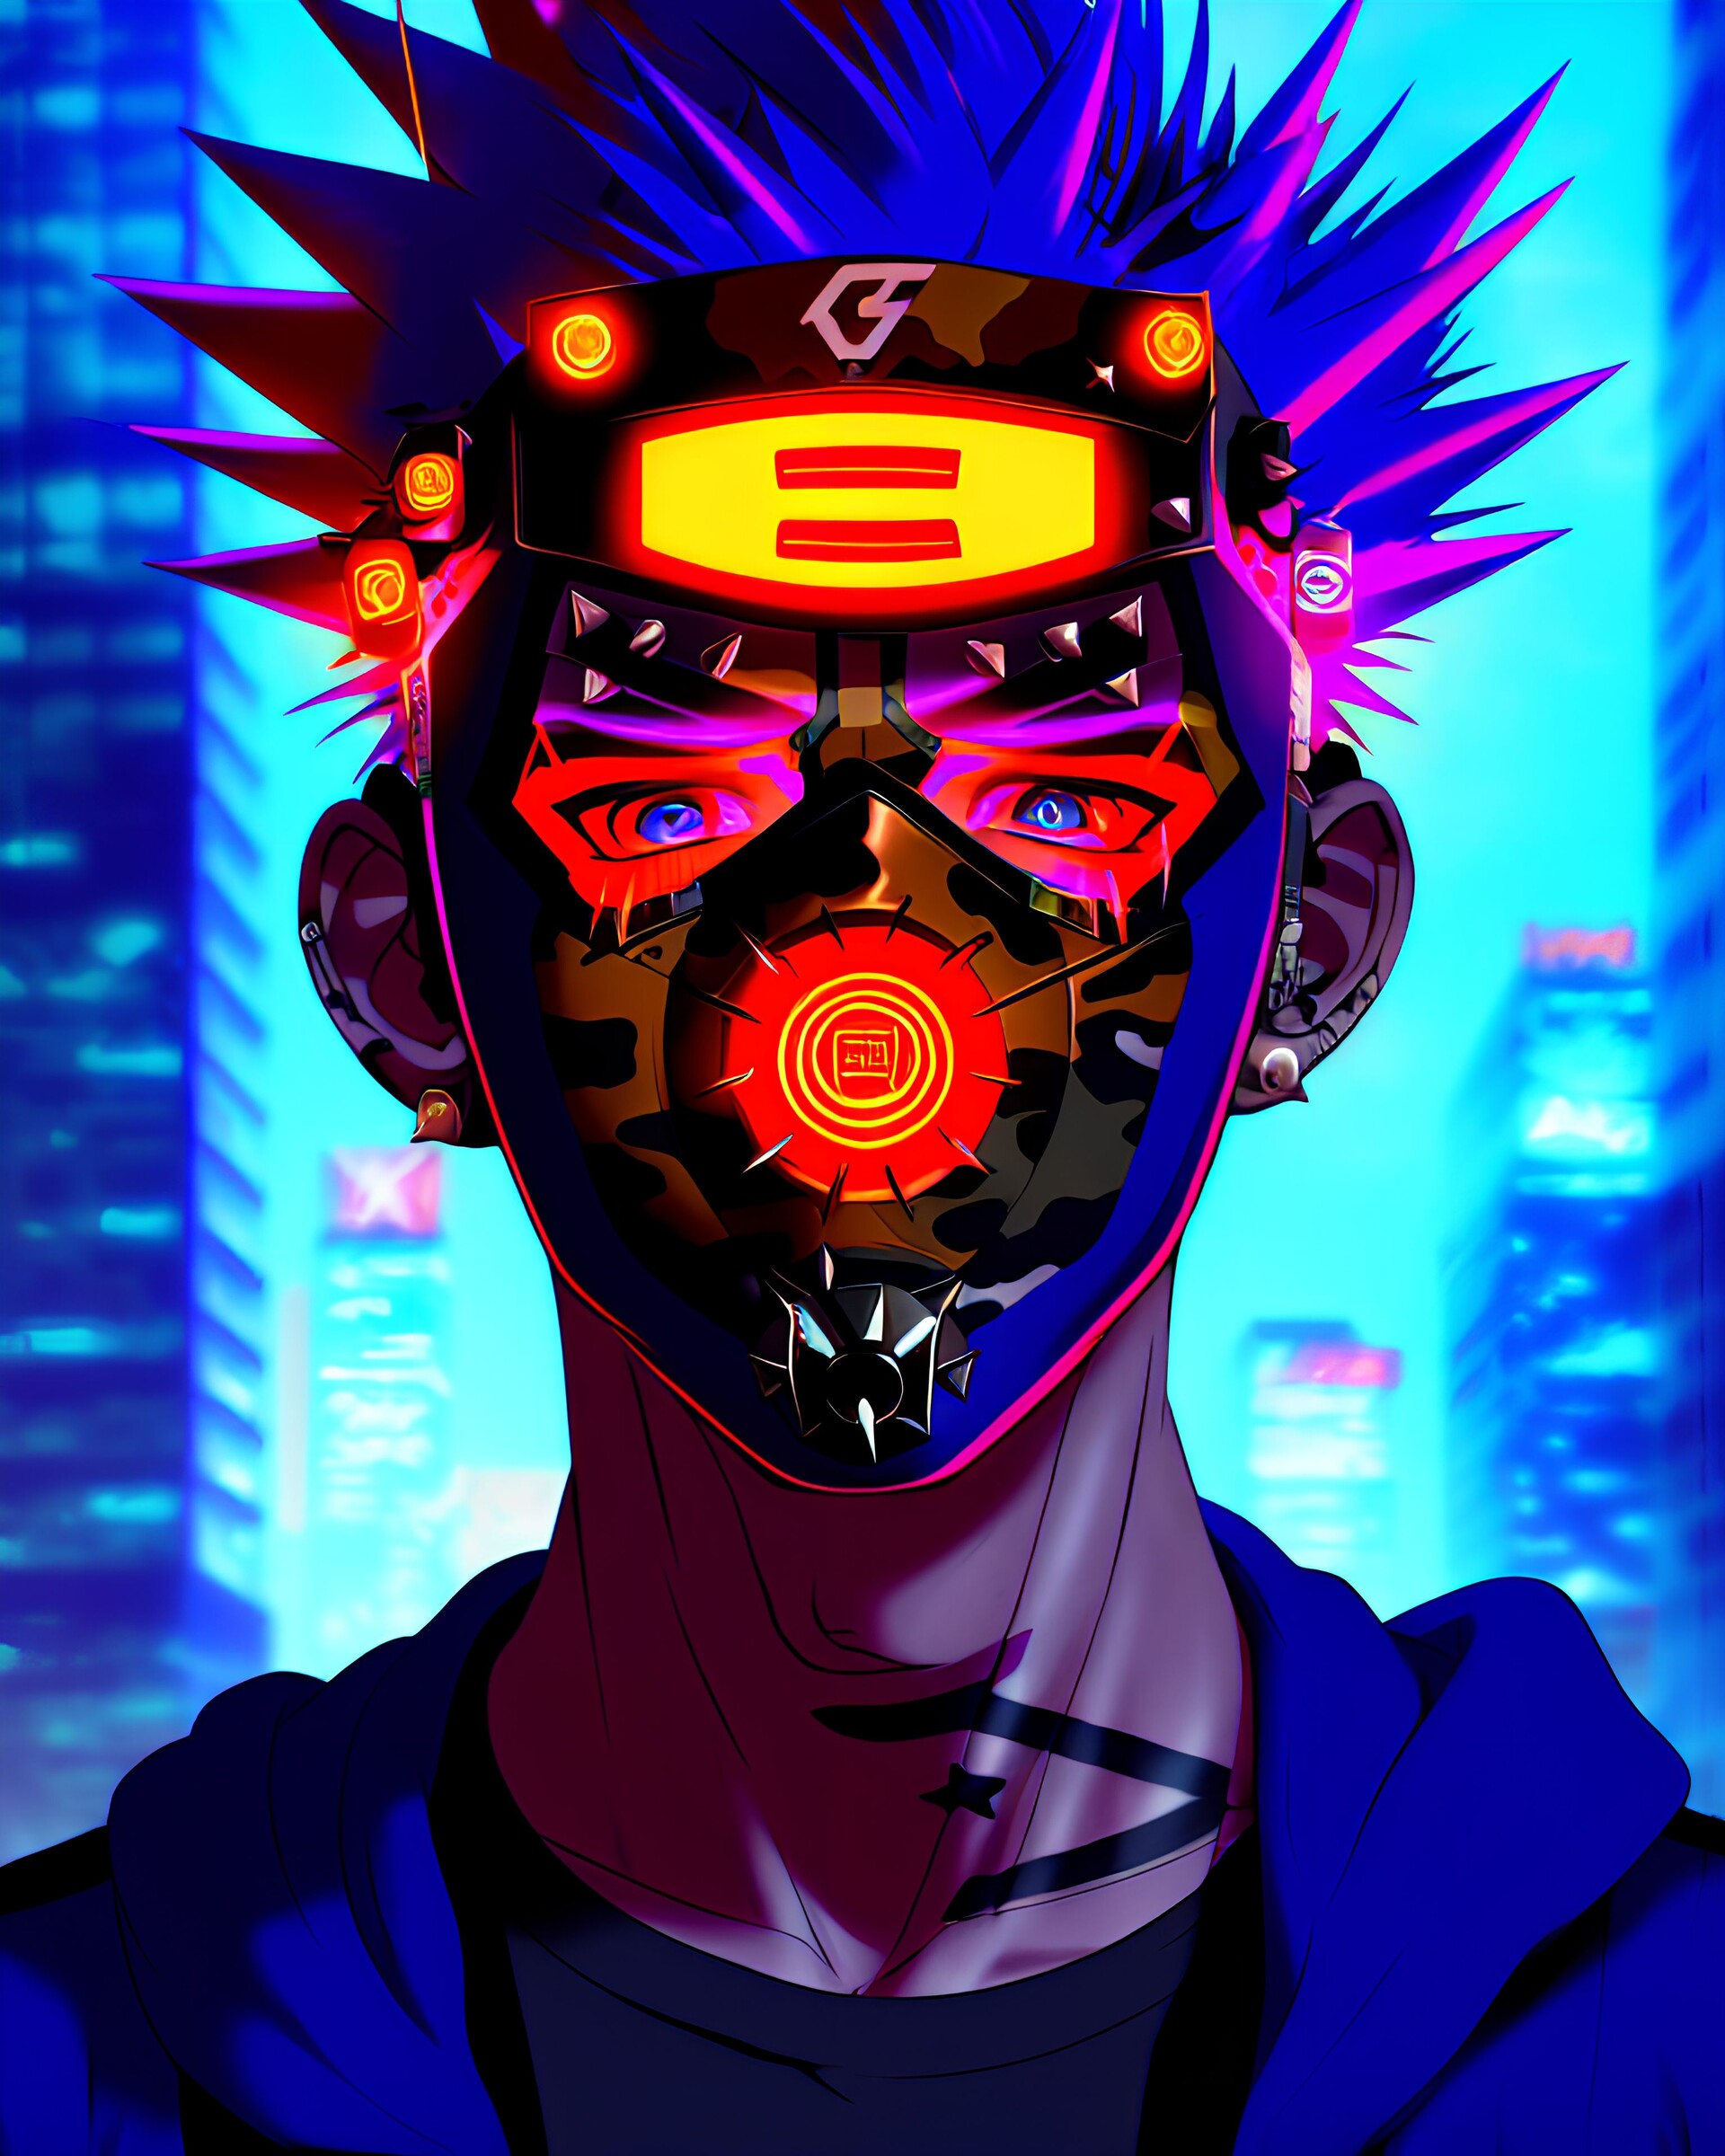 ANIME Cyberpunk Boy (5) by PunkerLazar on DeviantArt